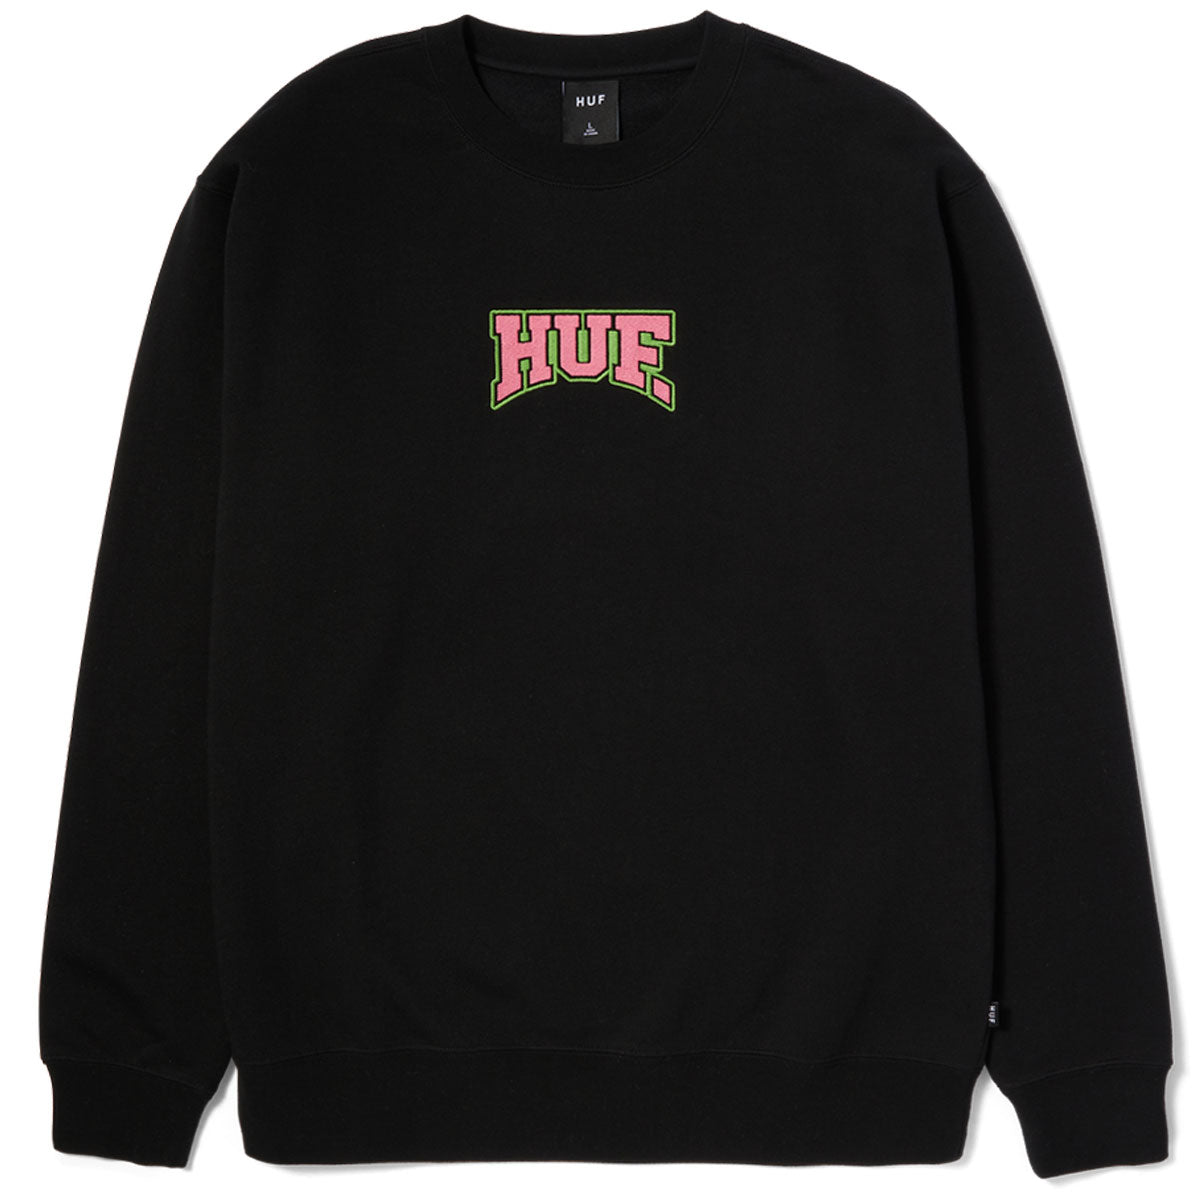 HUF Home Team Crewneck Sweatshirt - Black image 1